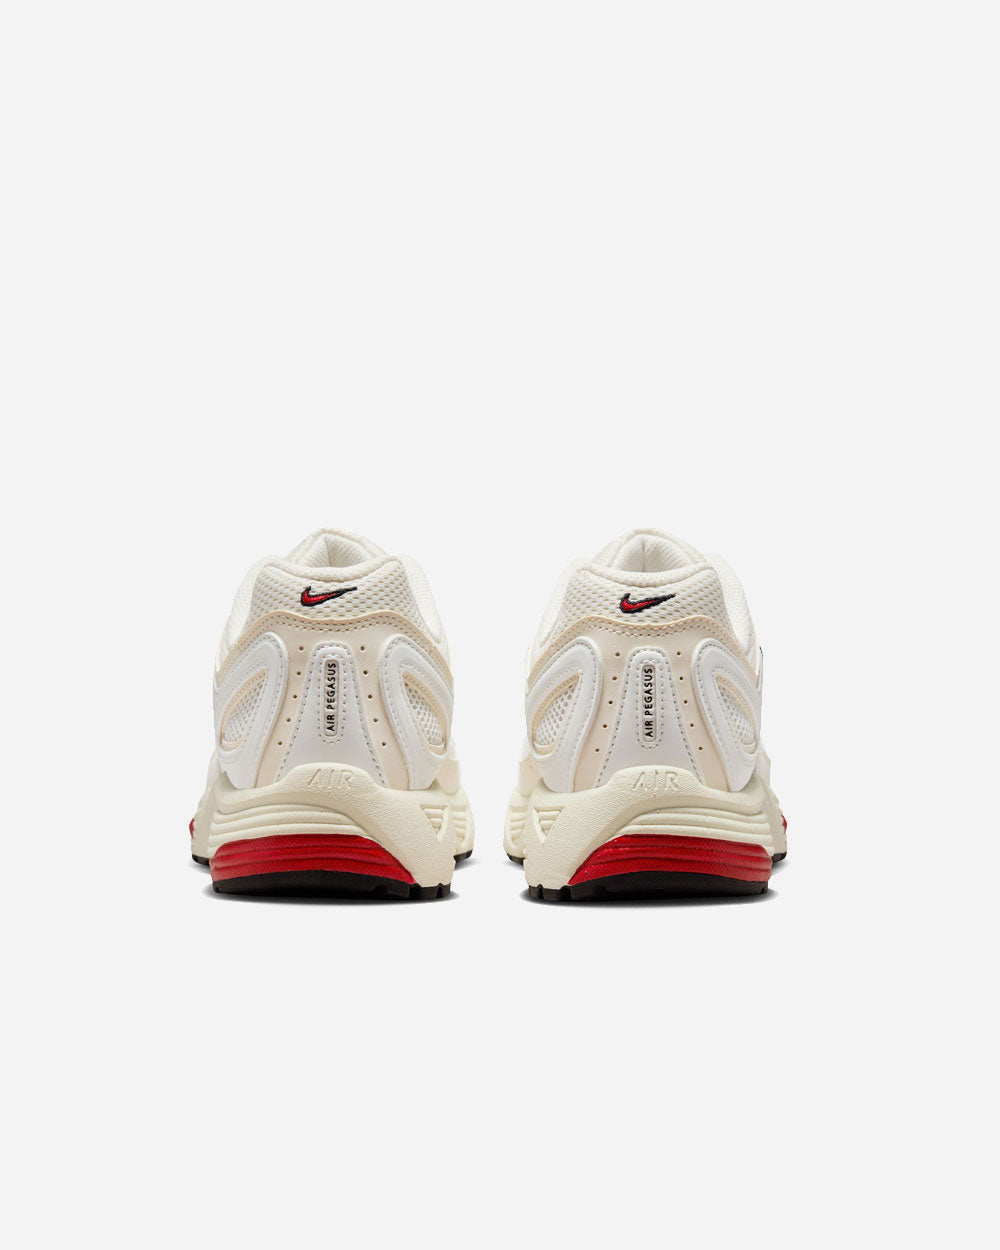 Nike Peg 2K5 White/Gym Red FN7153-101